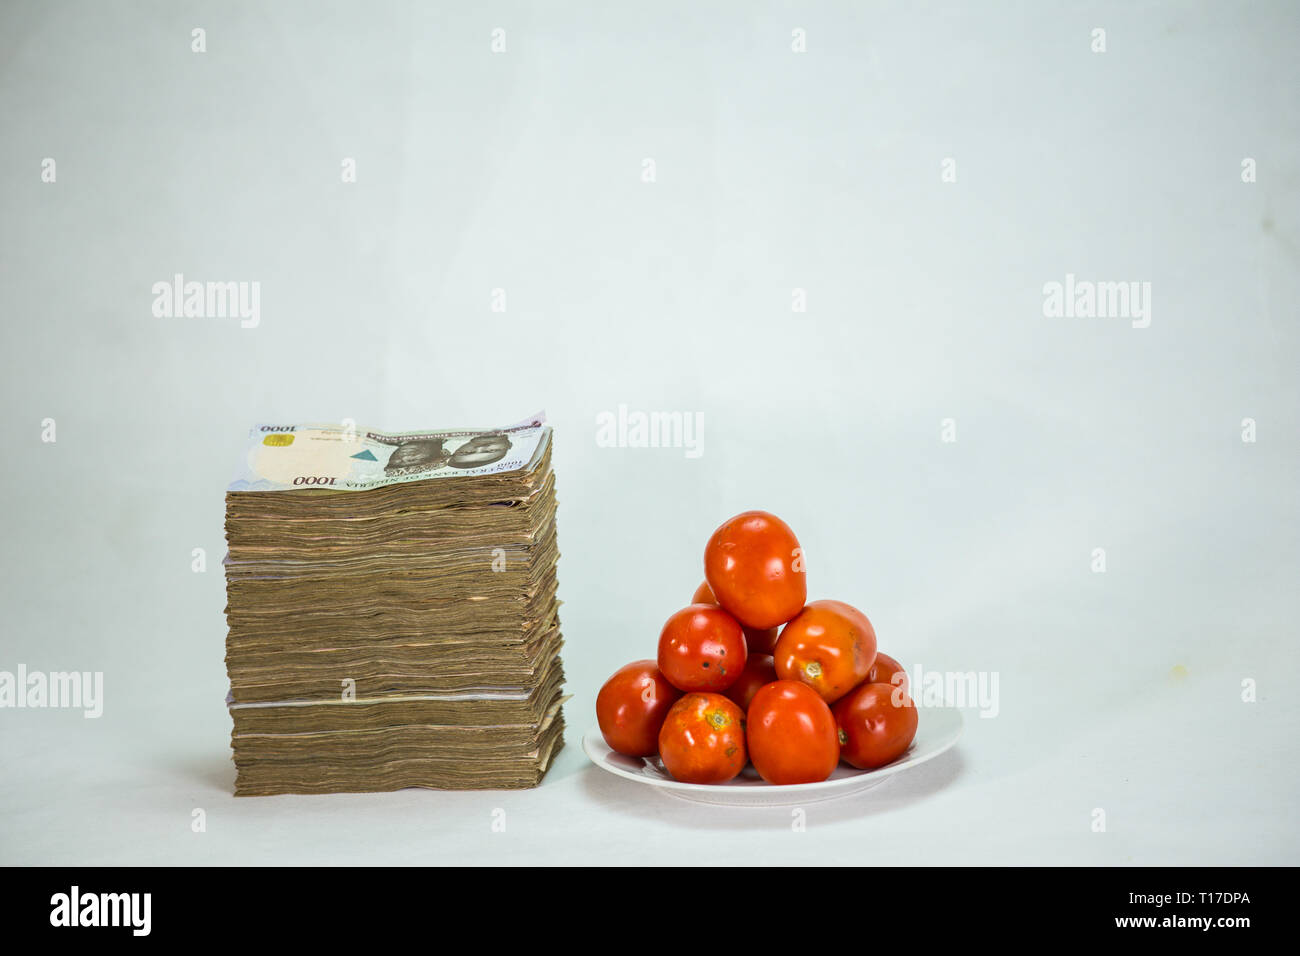 Stack of nigeria naira notes on white background wit tomatoes Stock Photo